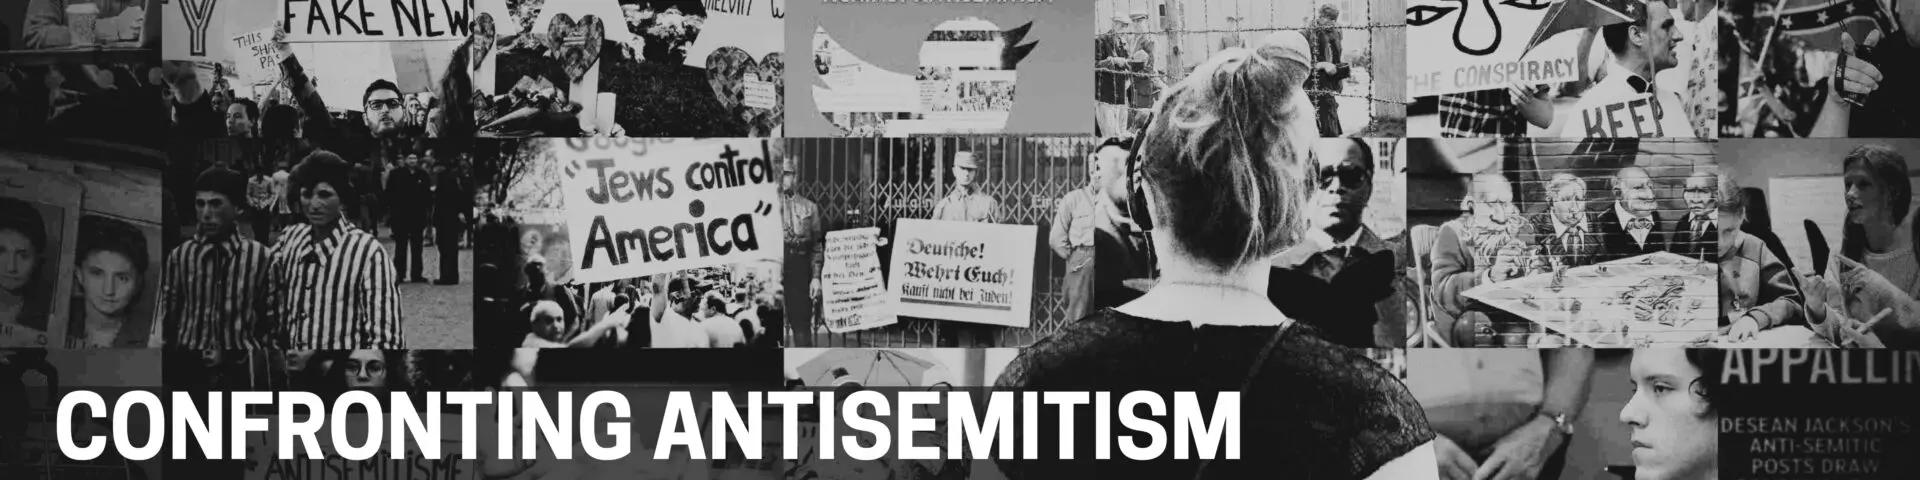 Confrontin Antisemitism